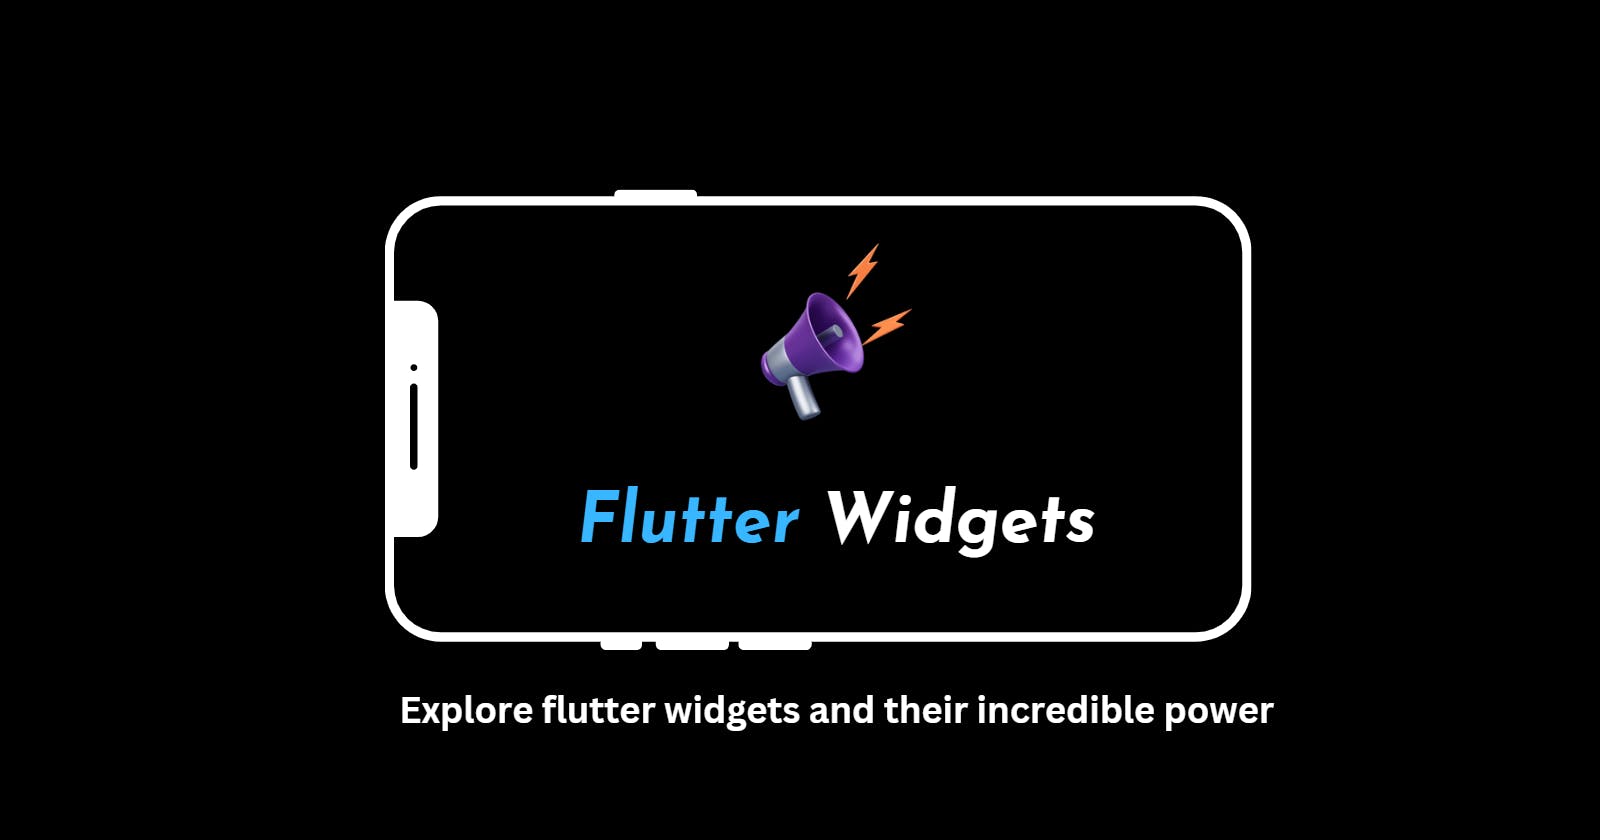 Exploring the Power of Flutter Widgets